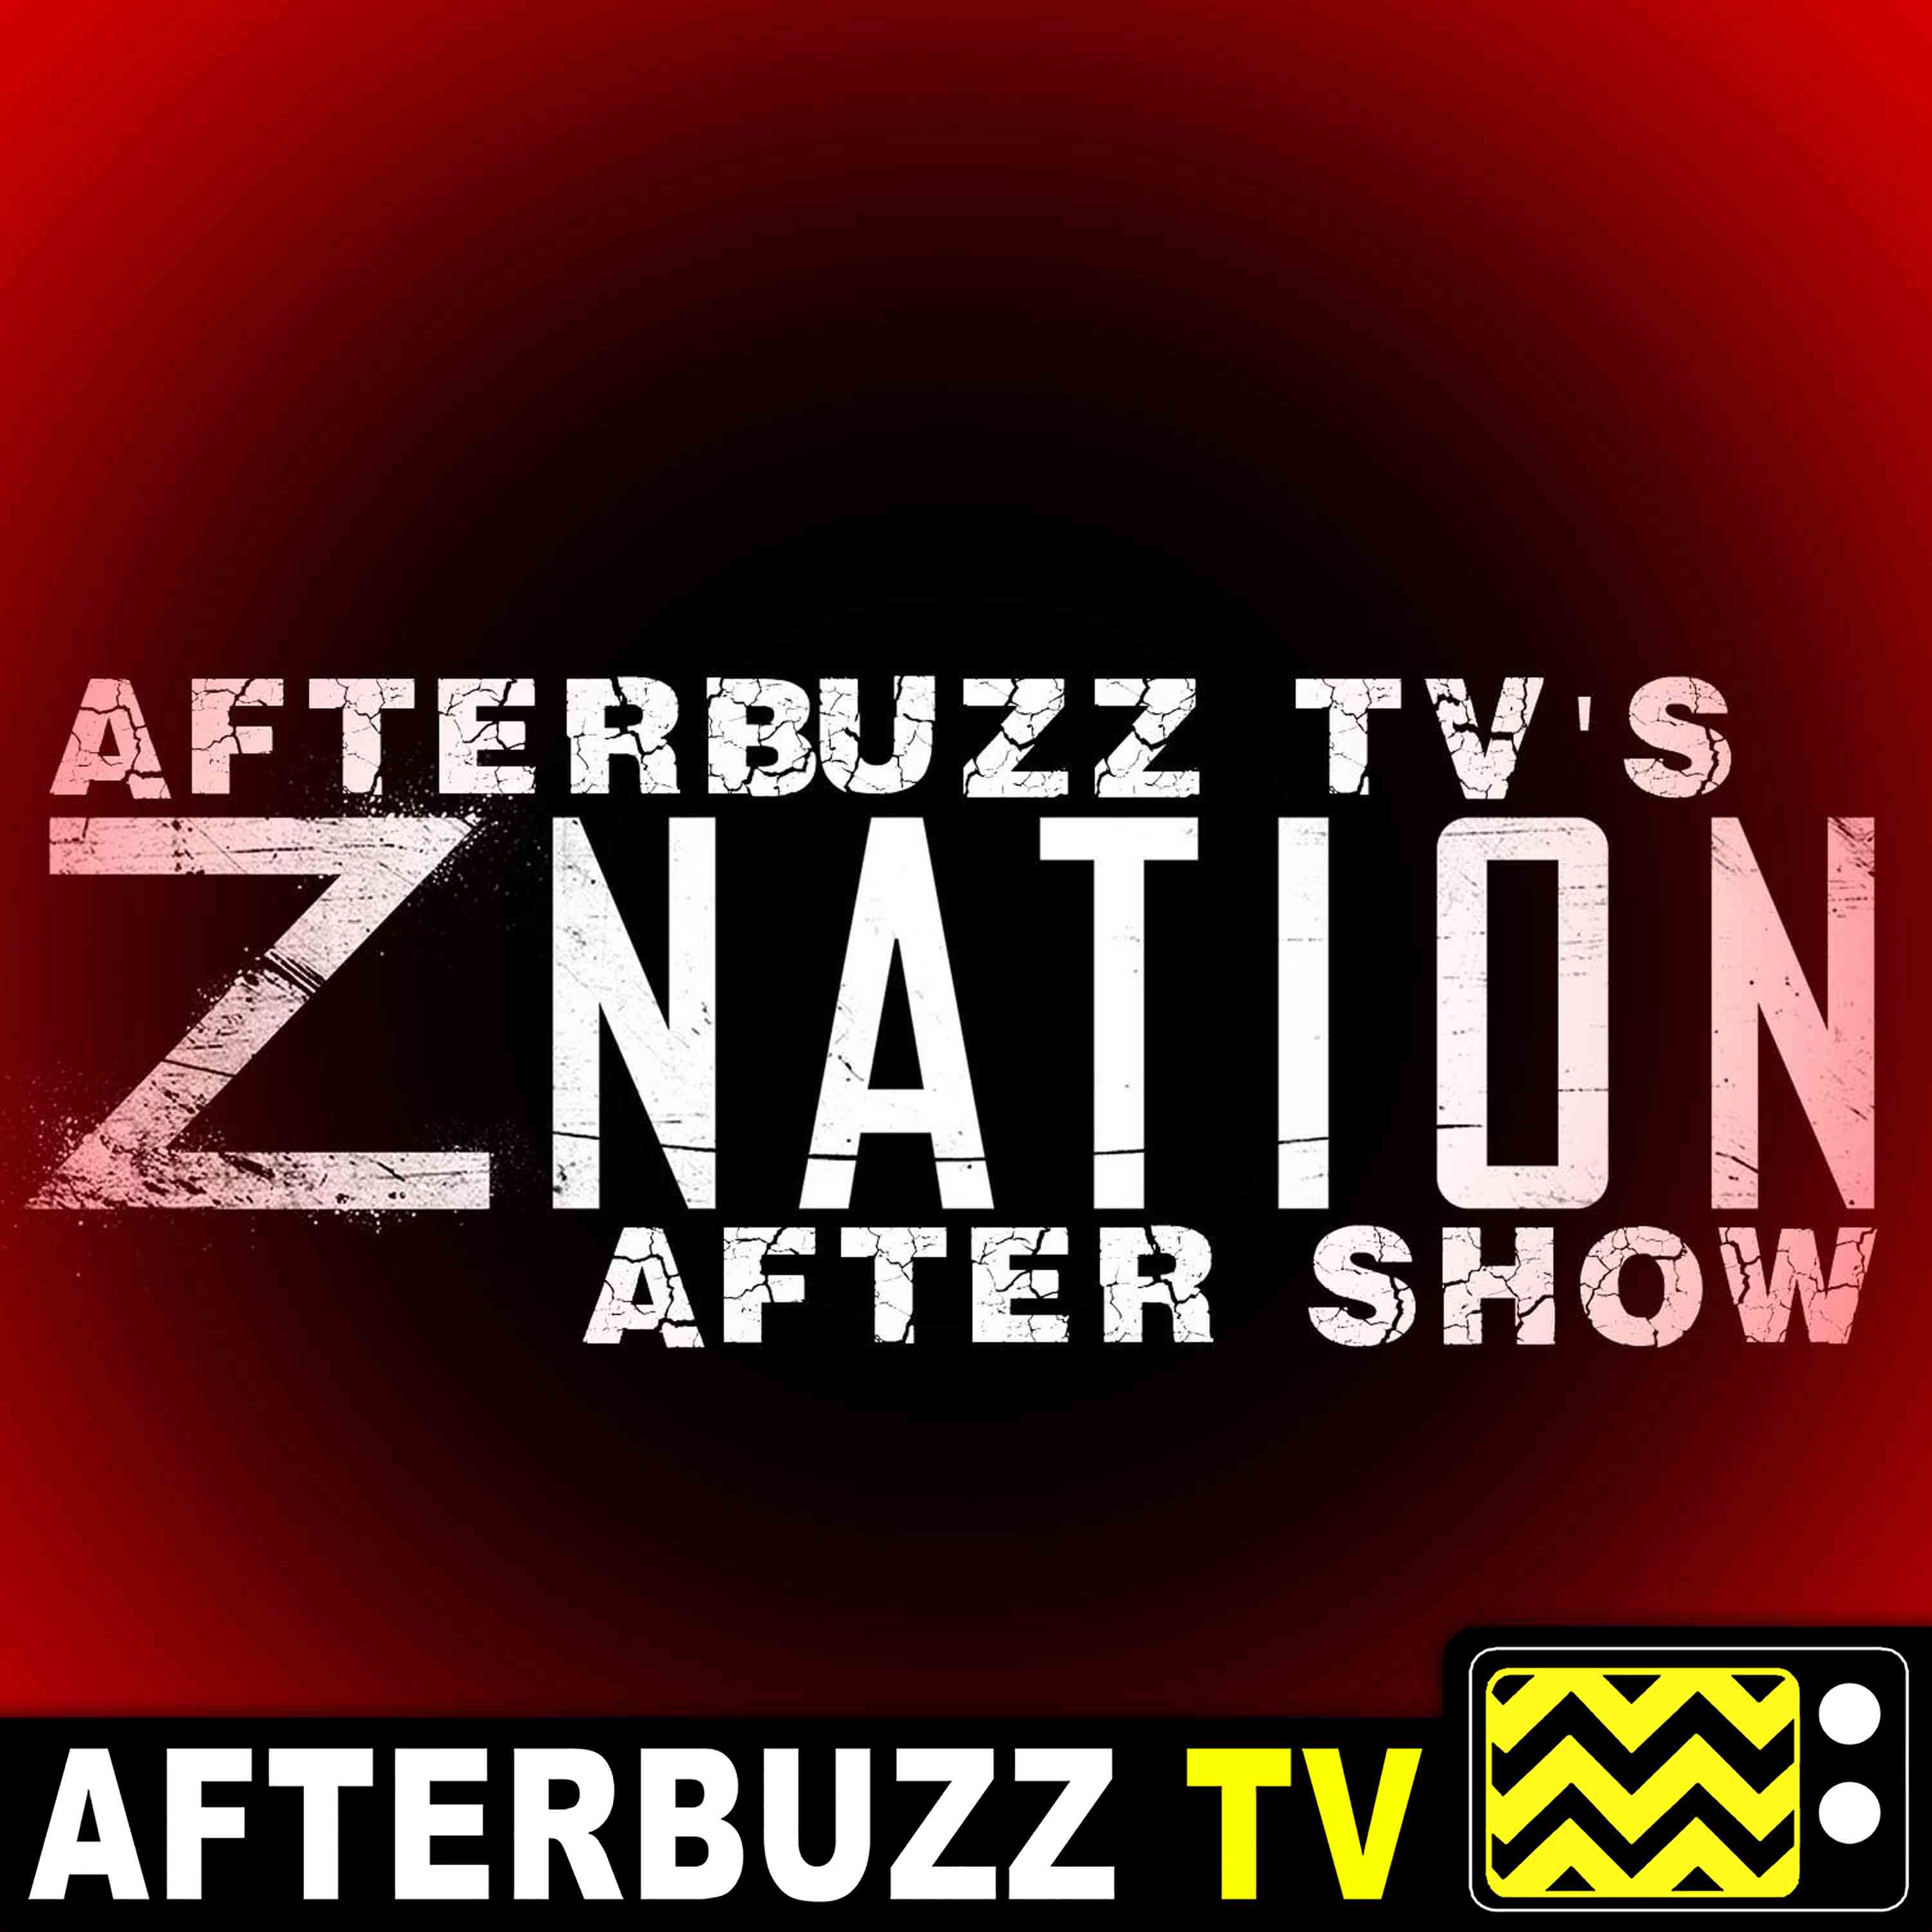 Z Nation S:4 | Daniel Schaefer Guests on Warren’s Wedding E:7 | AfterBuzz TV AfterShow